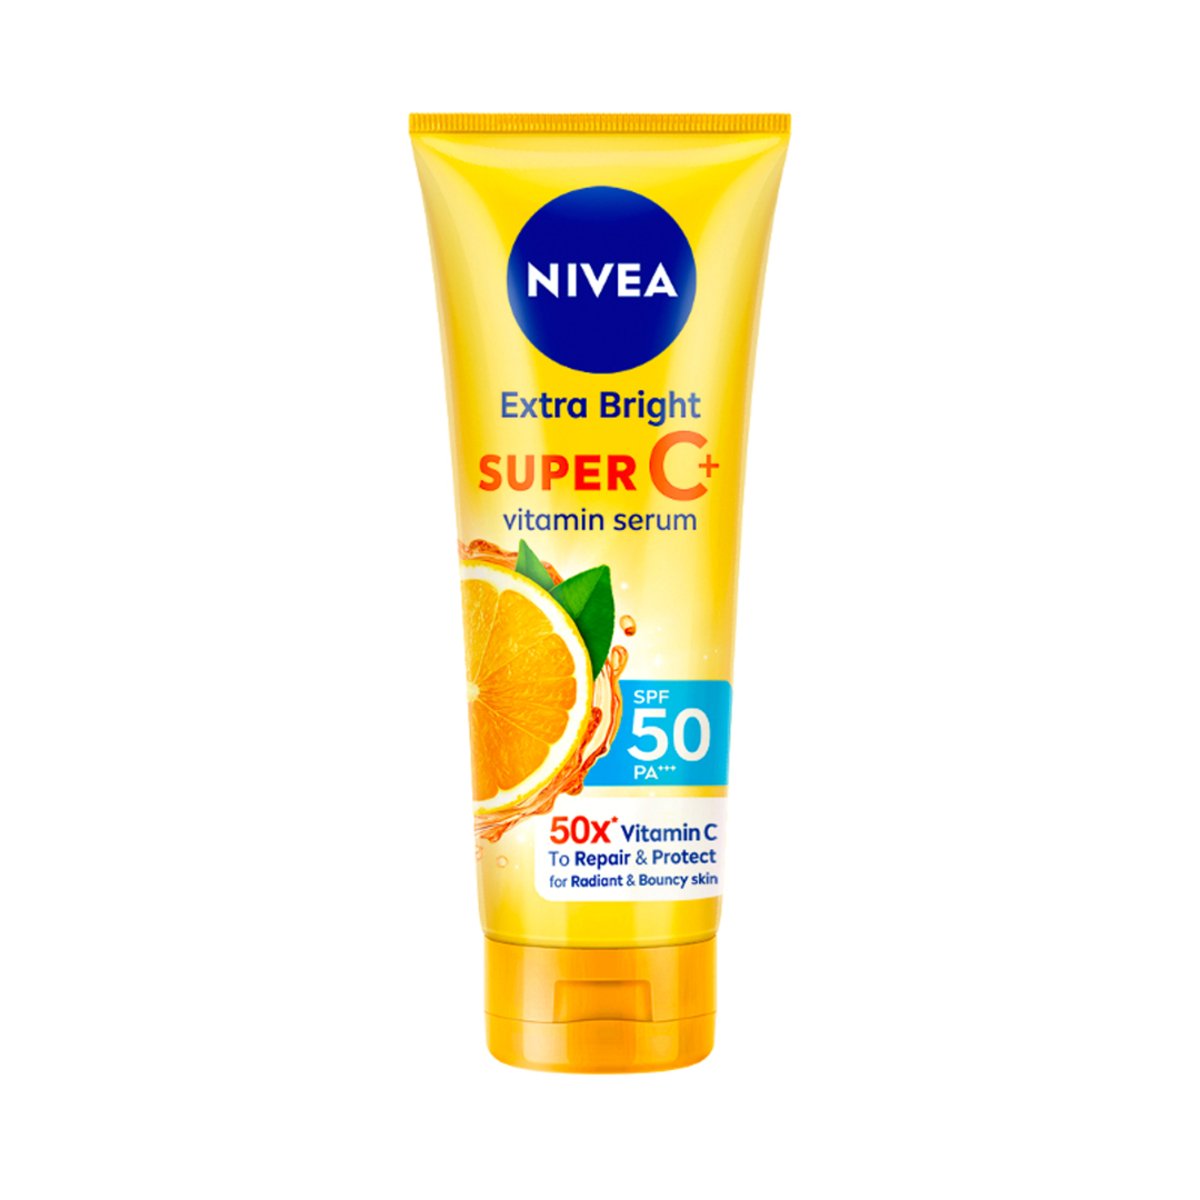 Nivea Extra Bright SuperC+Vitamin Serum 320ml